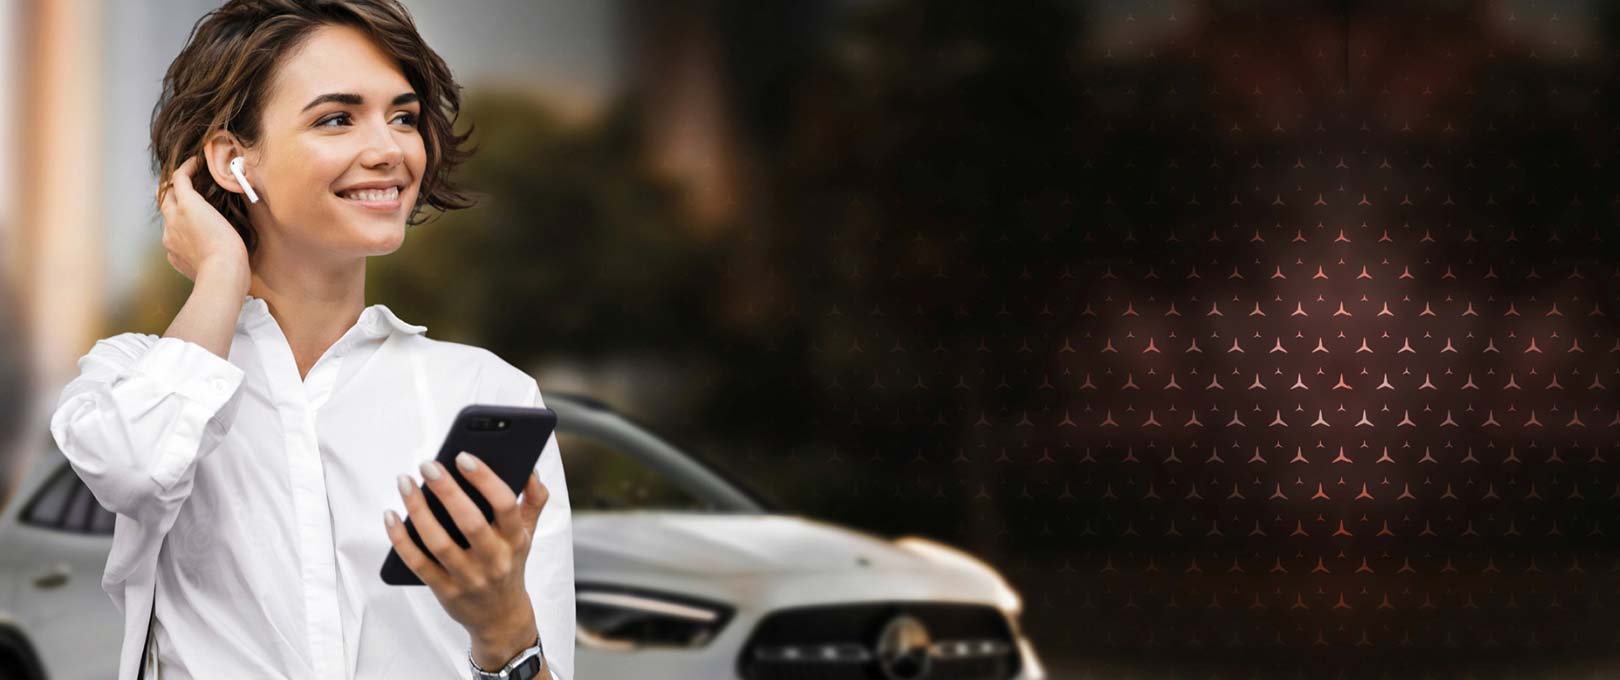 Mercedes - Benz online randevu hizmeti